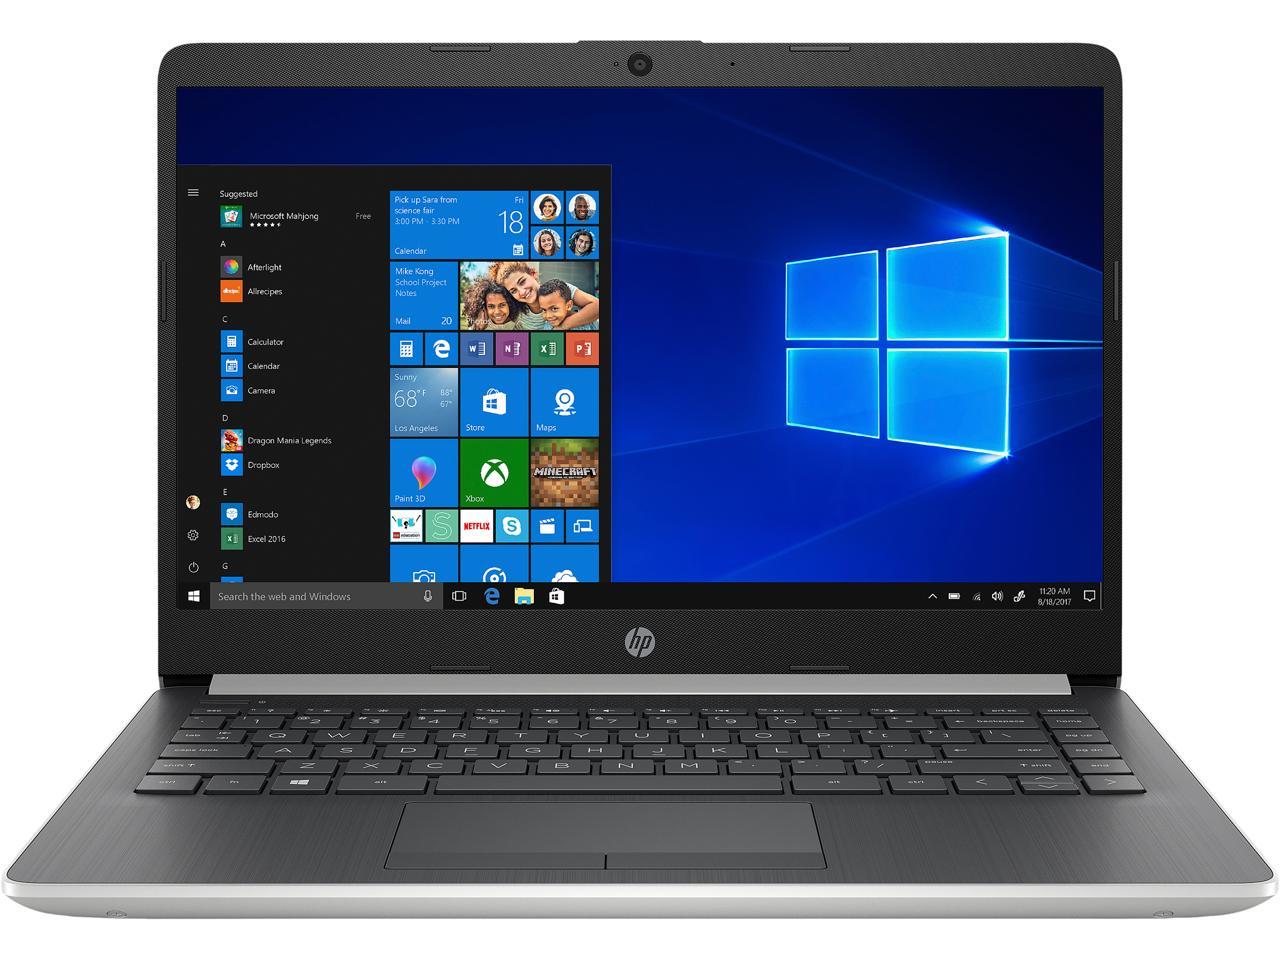 HP Laptop 14-dk0075nr AMD A4-Series A4-9125 (2.30 GHz) 4 GB Memory 64 GB eMMC SSD AMD Radeon R3 Series 14.0" Windows 10 S